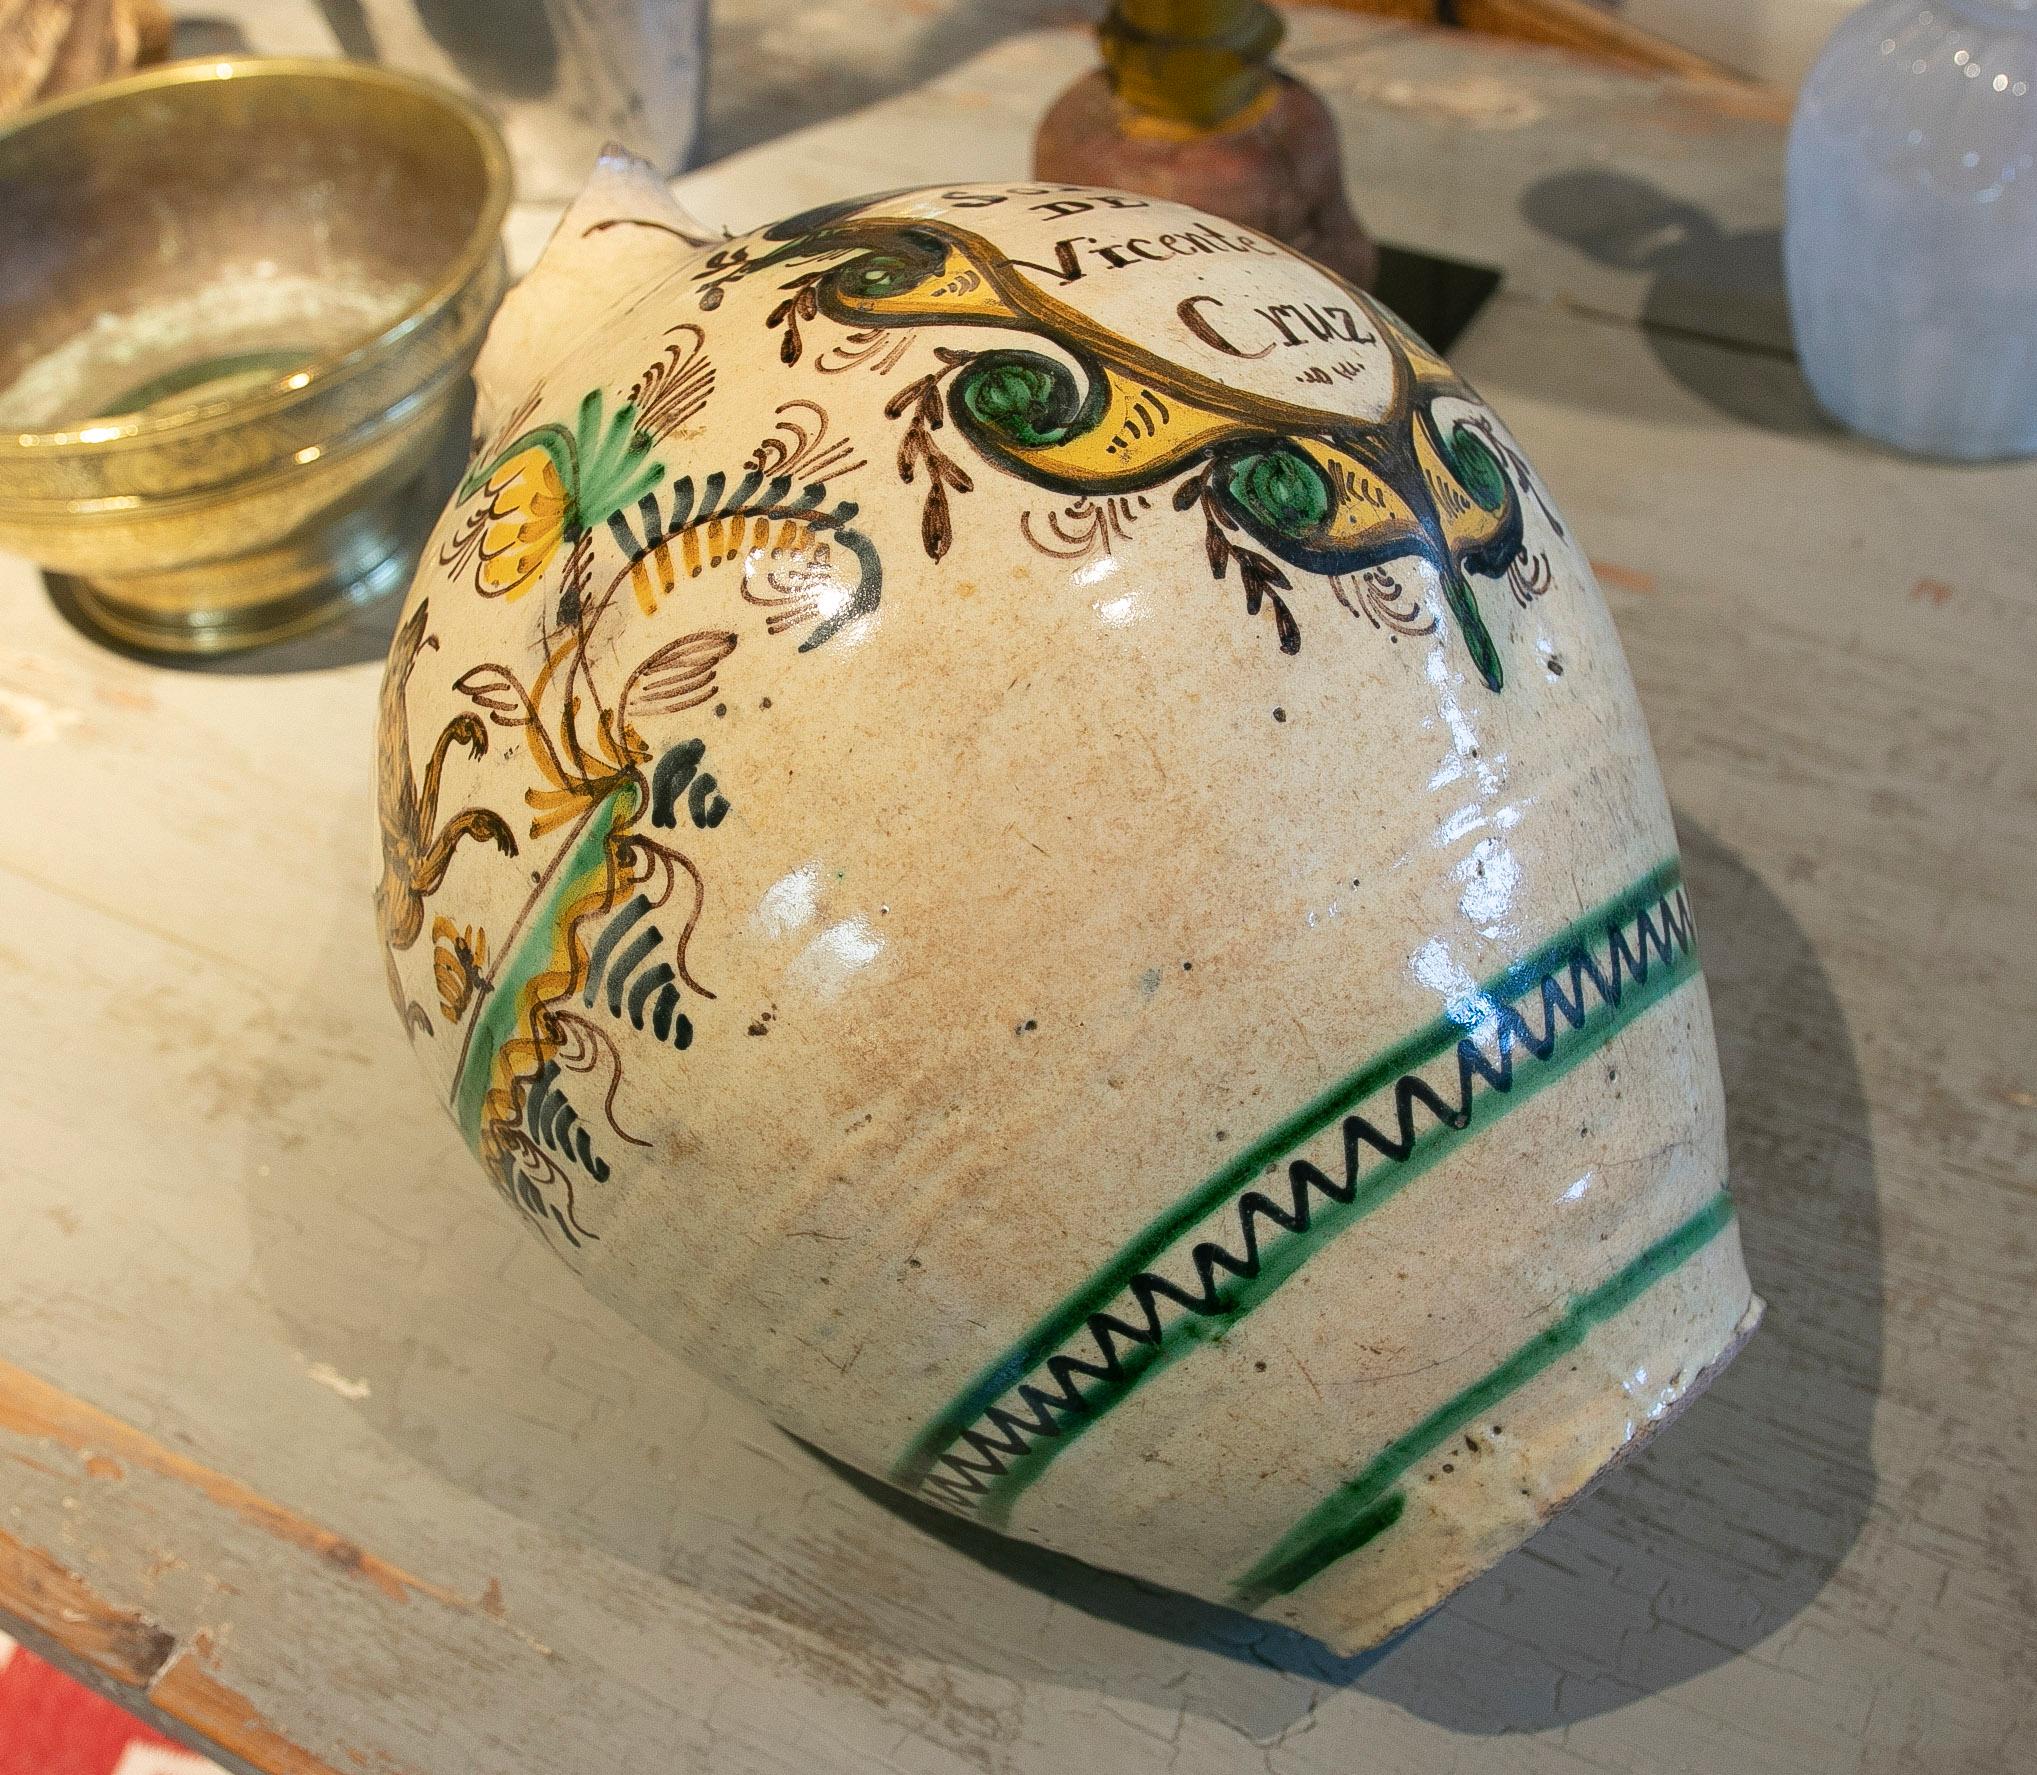 Spanish Glazed Ceramic Vase with the Inscription 